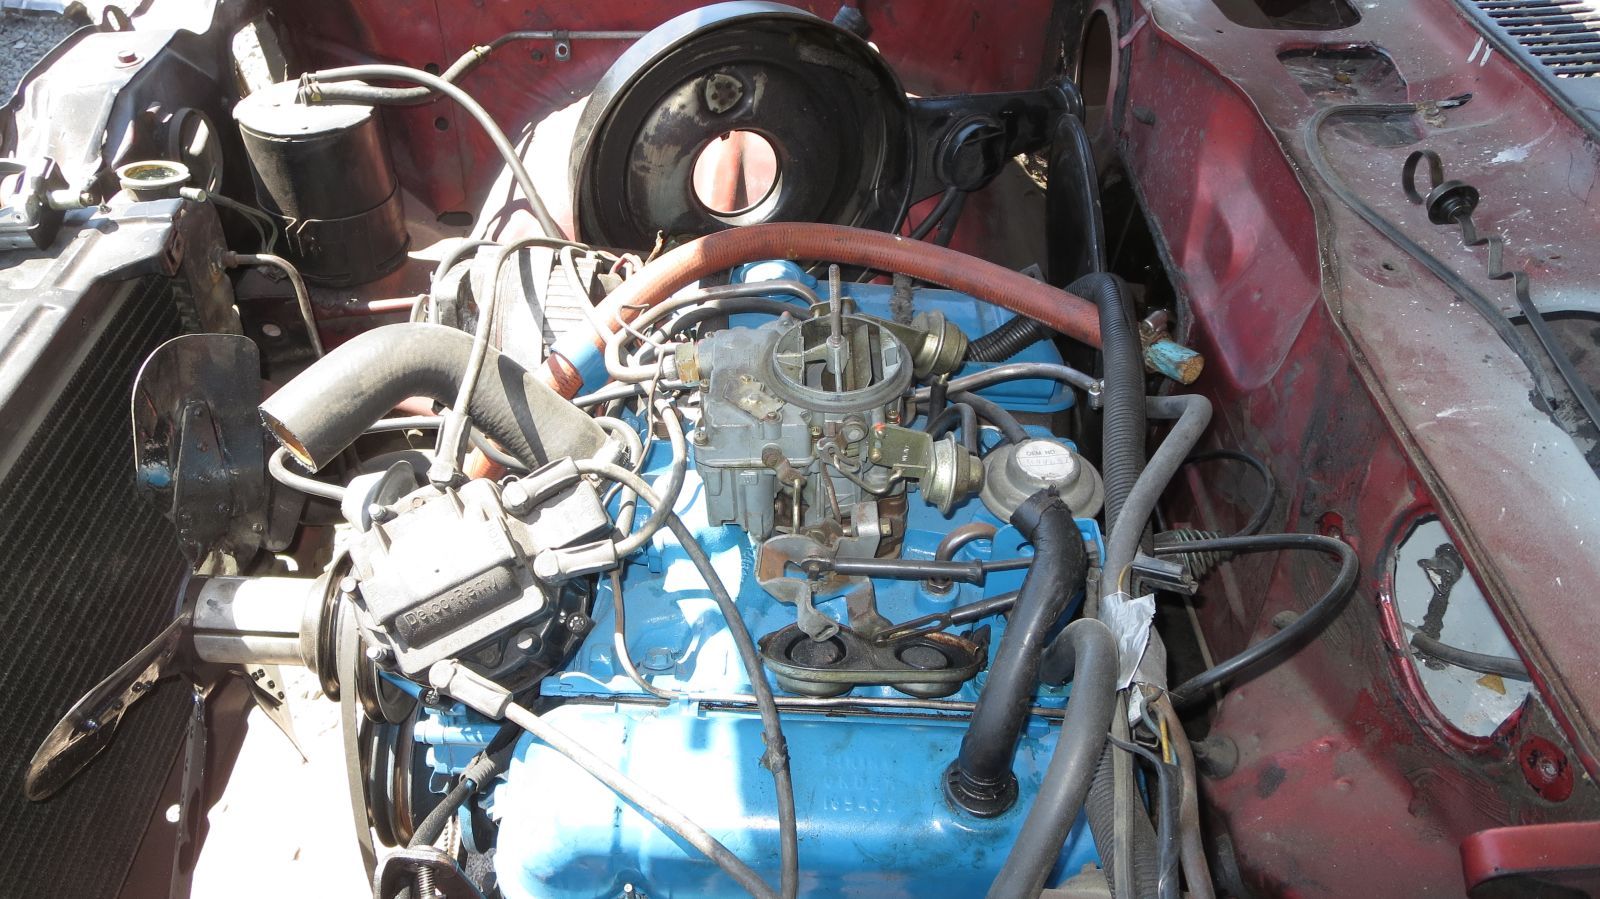 V6 Engine- Buick Also Turned A V8 Into A V6